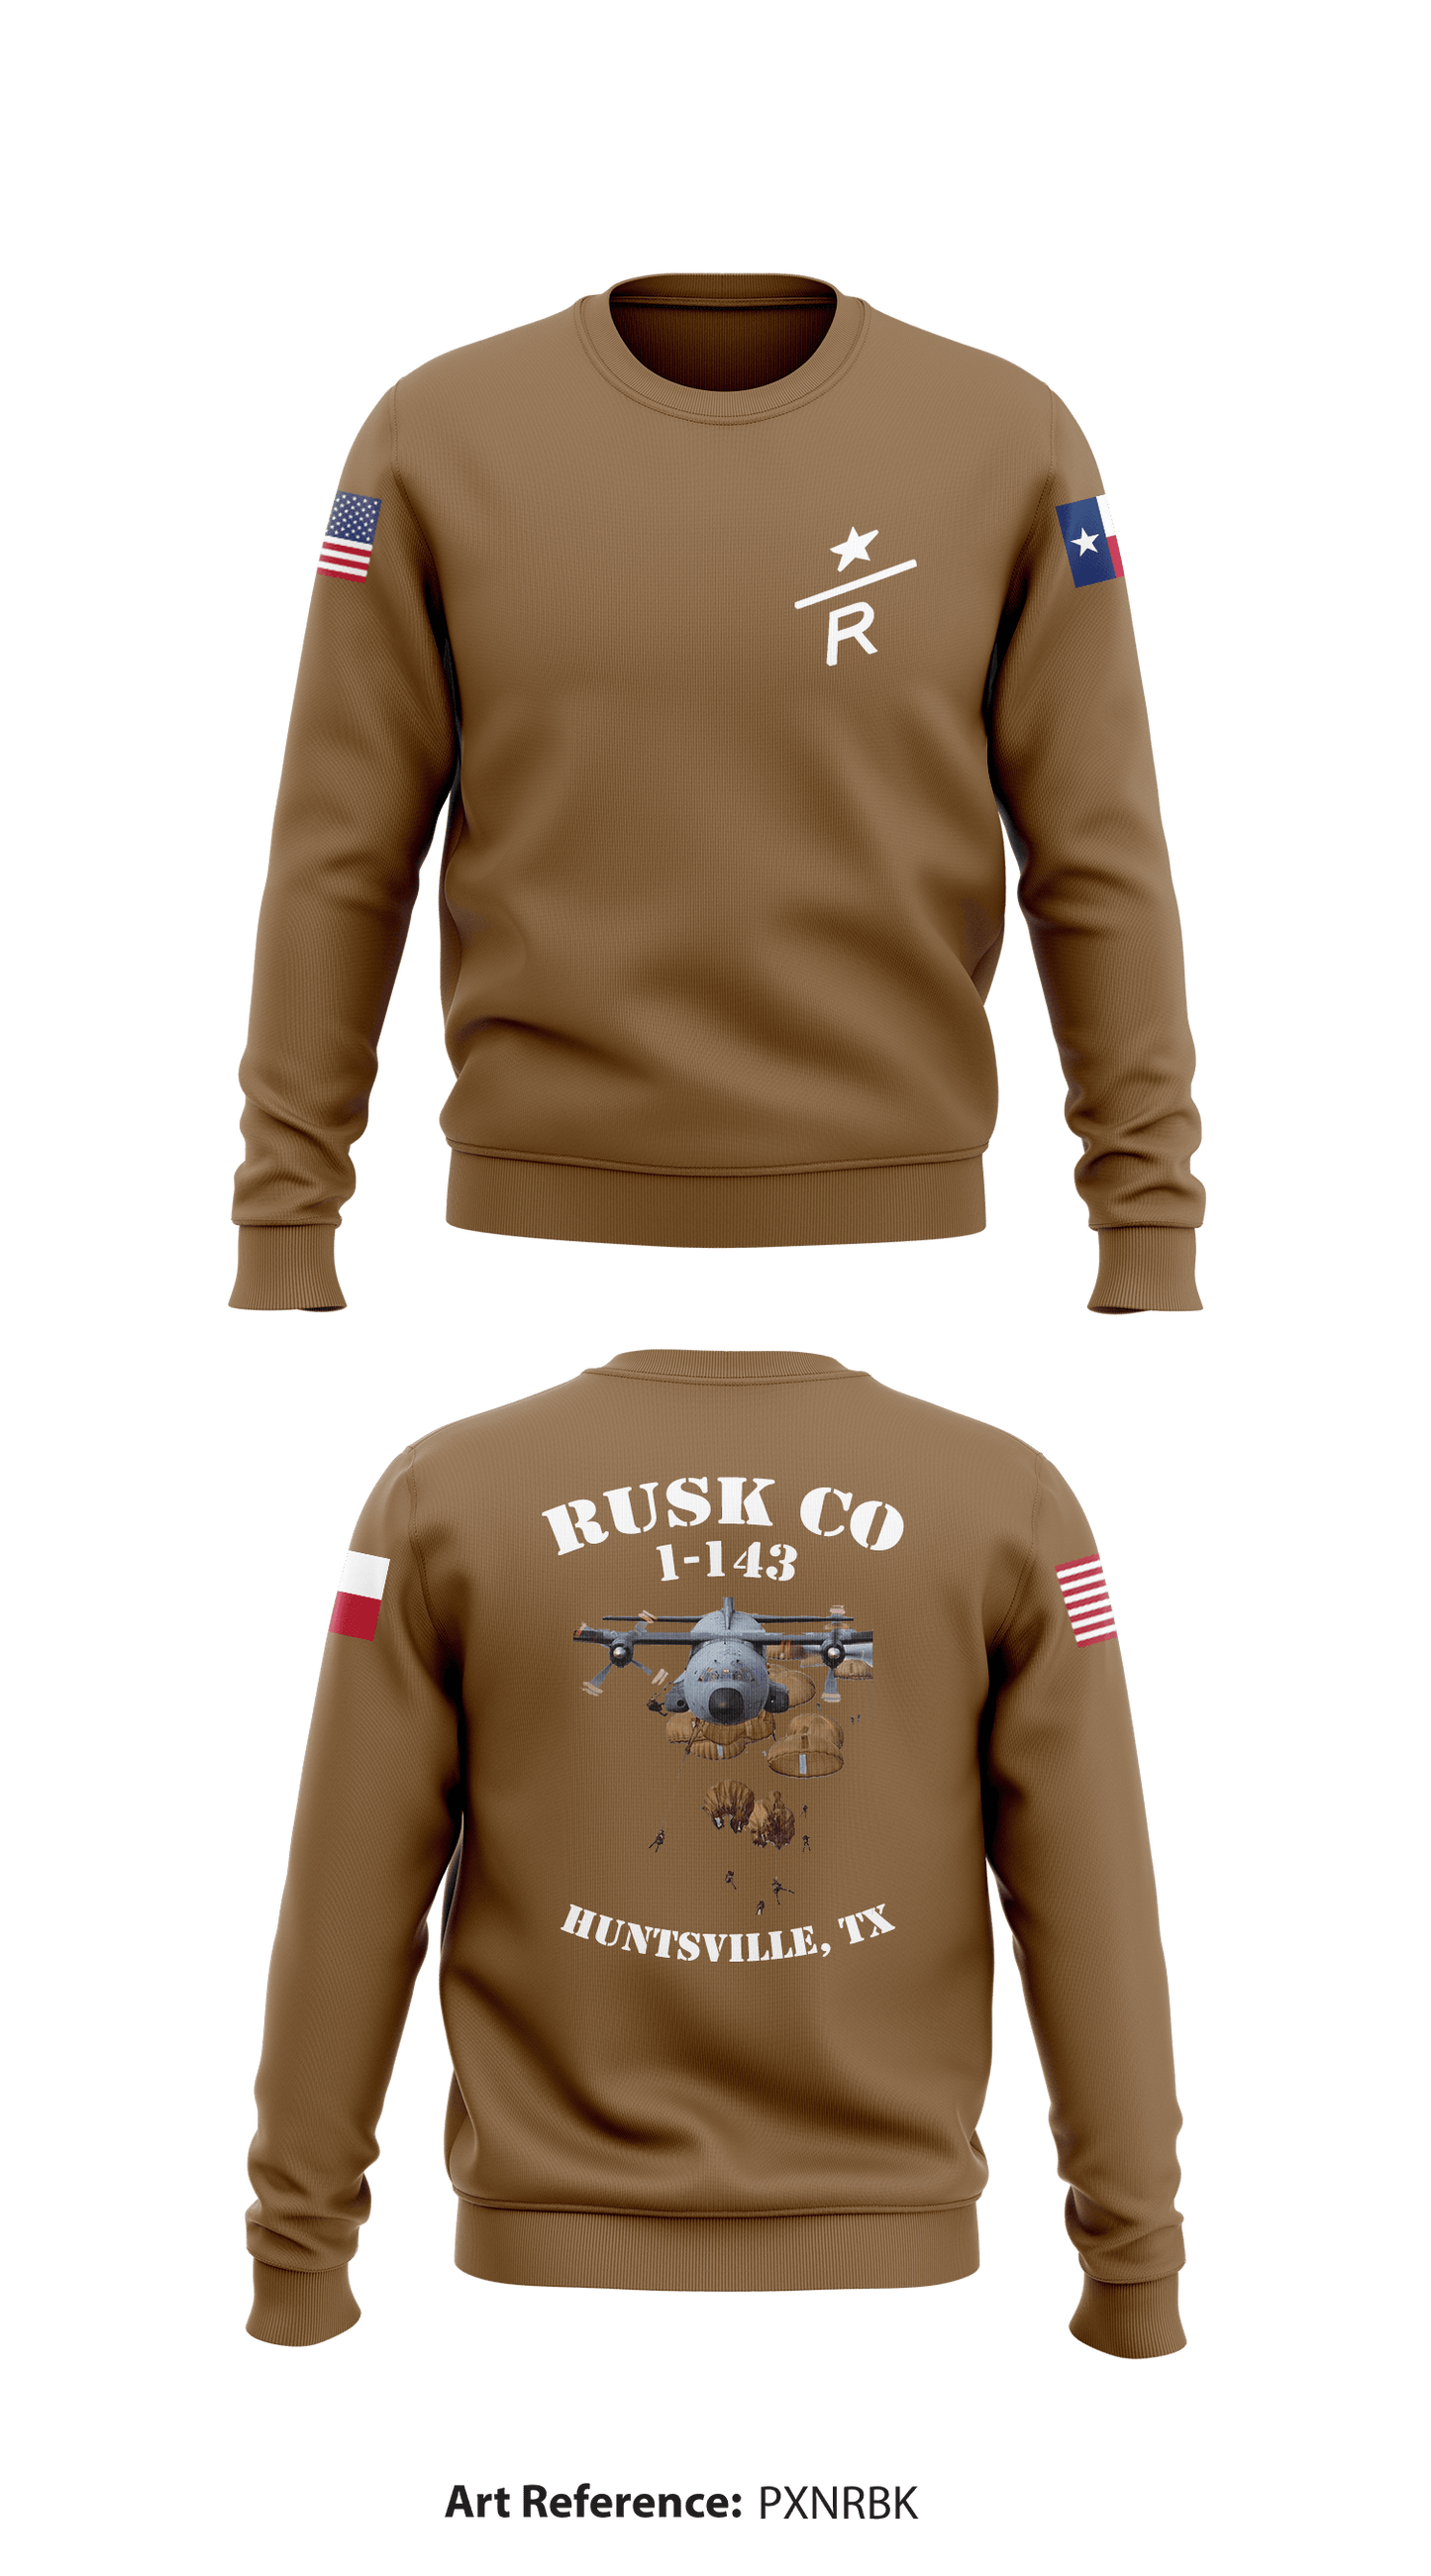 Rusk Company 1-143 Store 1 Core Men's Crewneck Performance Sweatshirt - pXnRBk